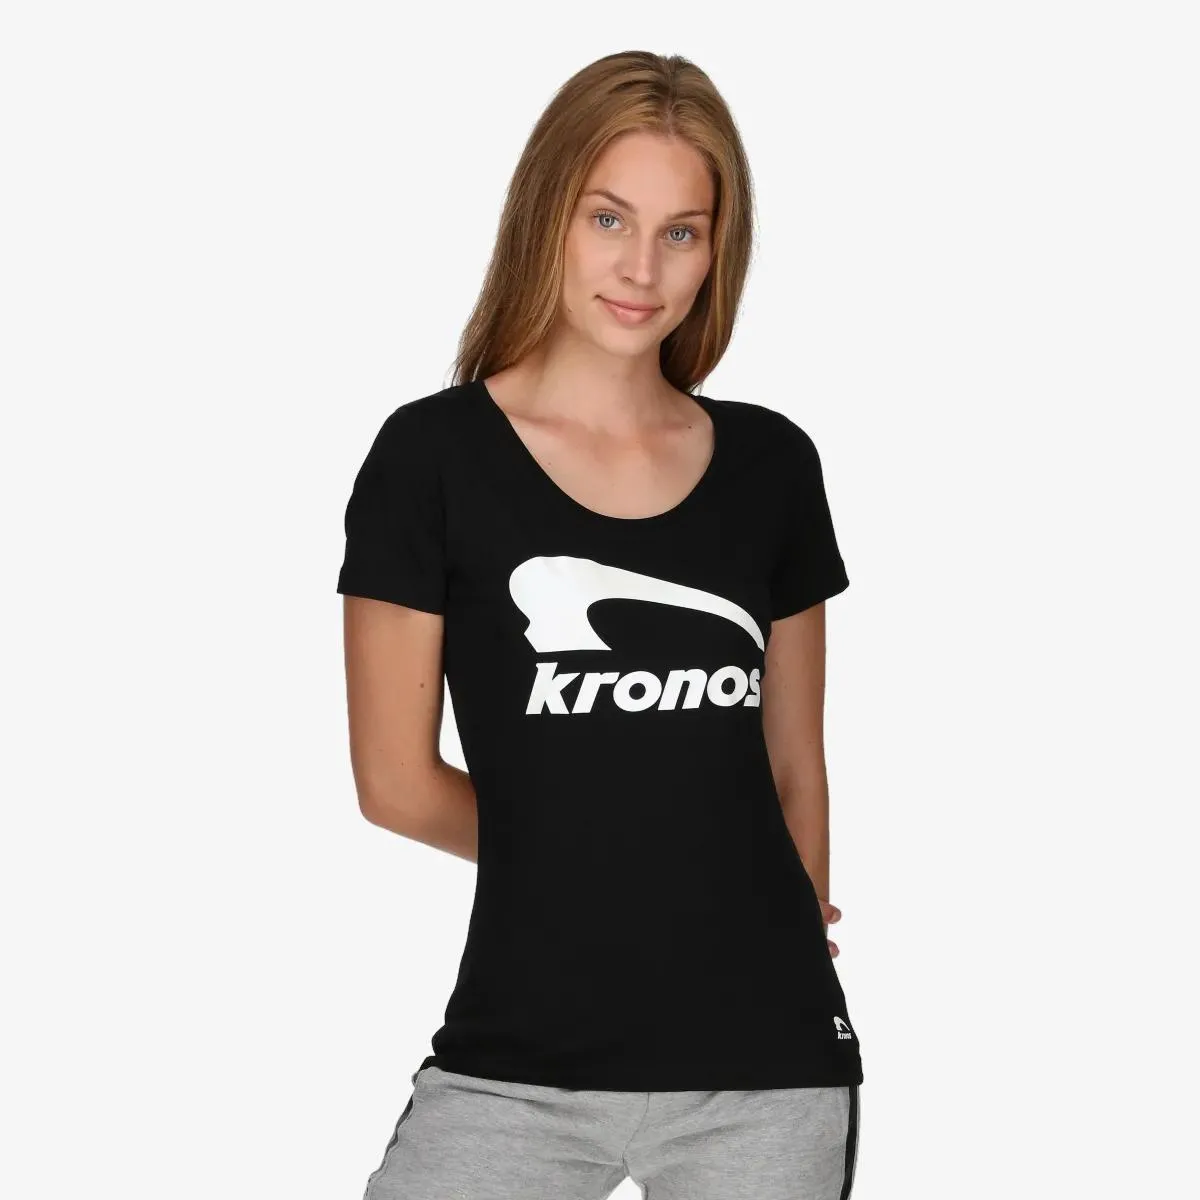 Kronos T-shirt Christy 